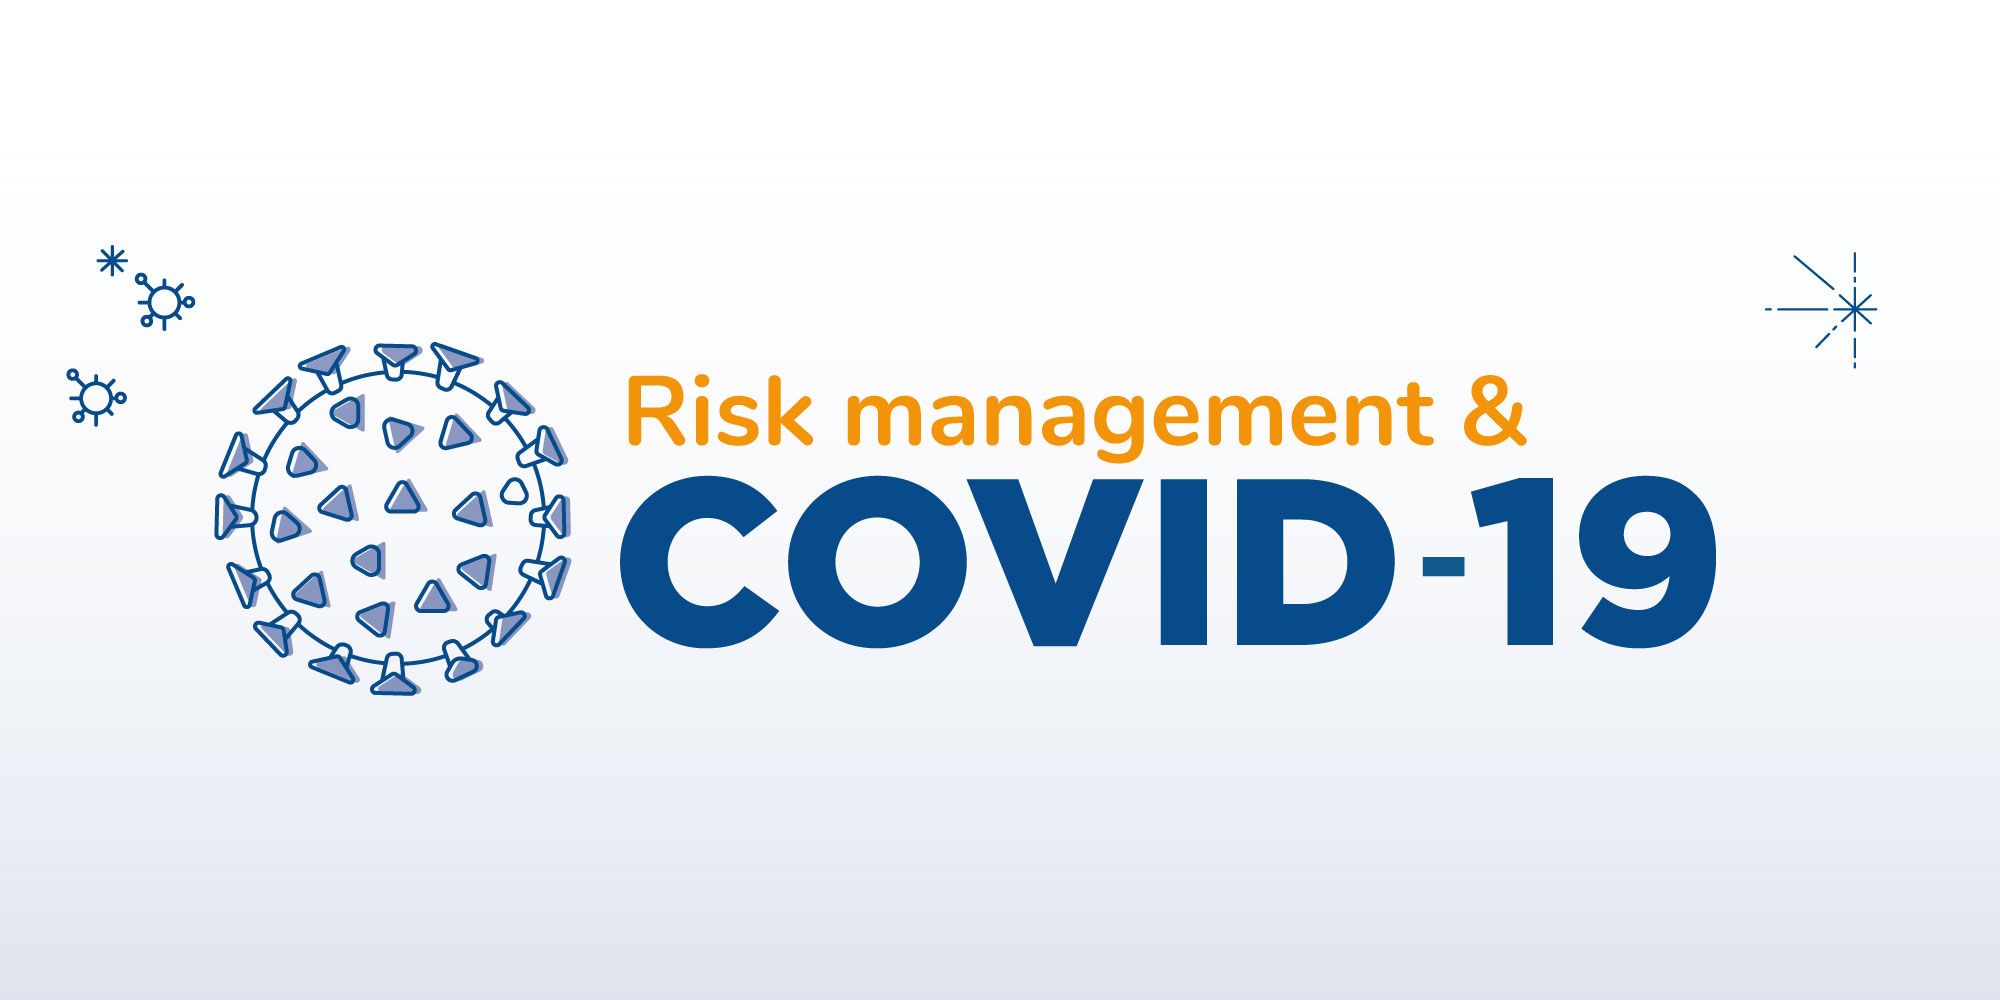 "Risk management & Covid-19" program